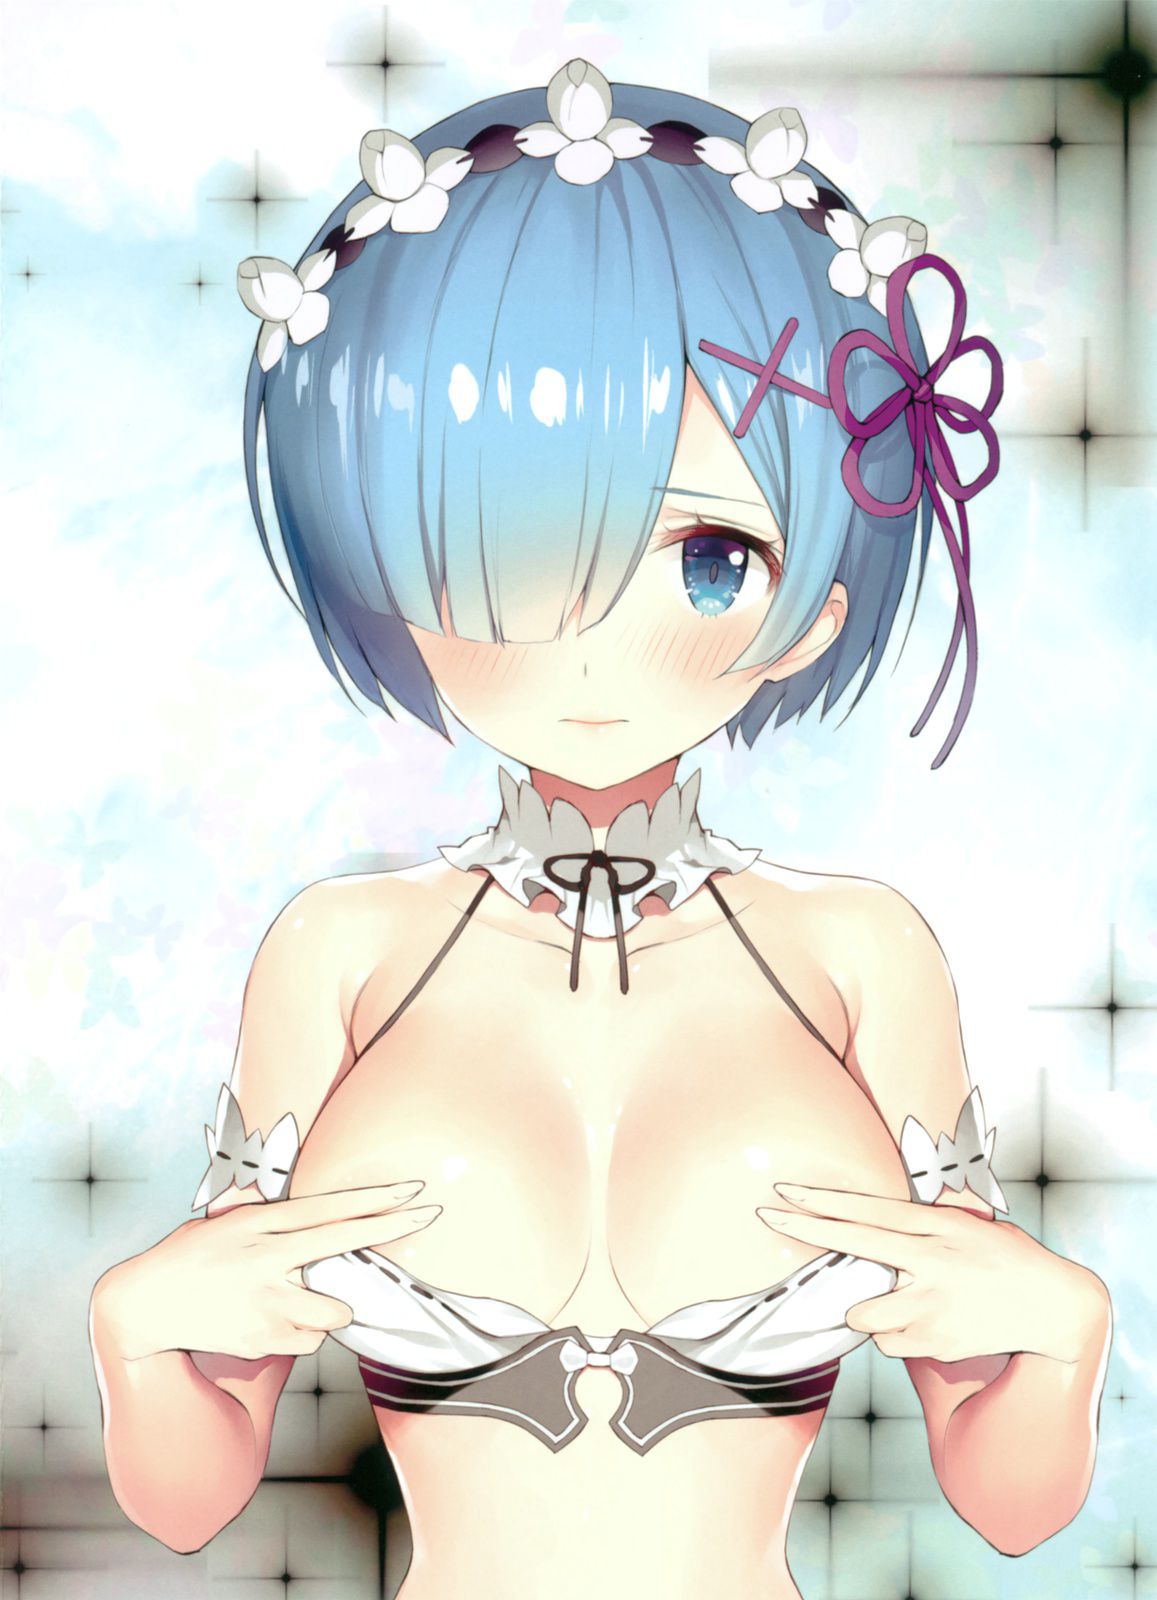 [Rezero] erotic image of sister REM Part 12 10